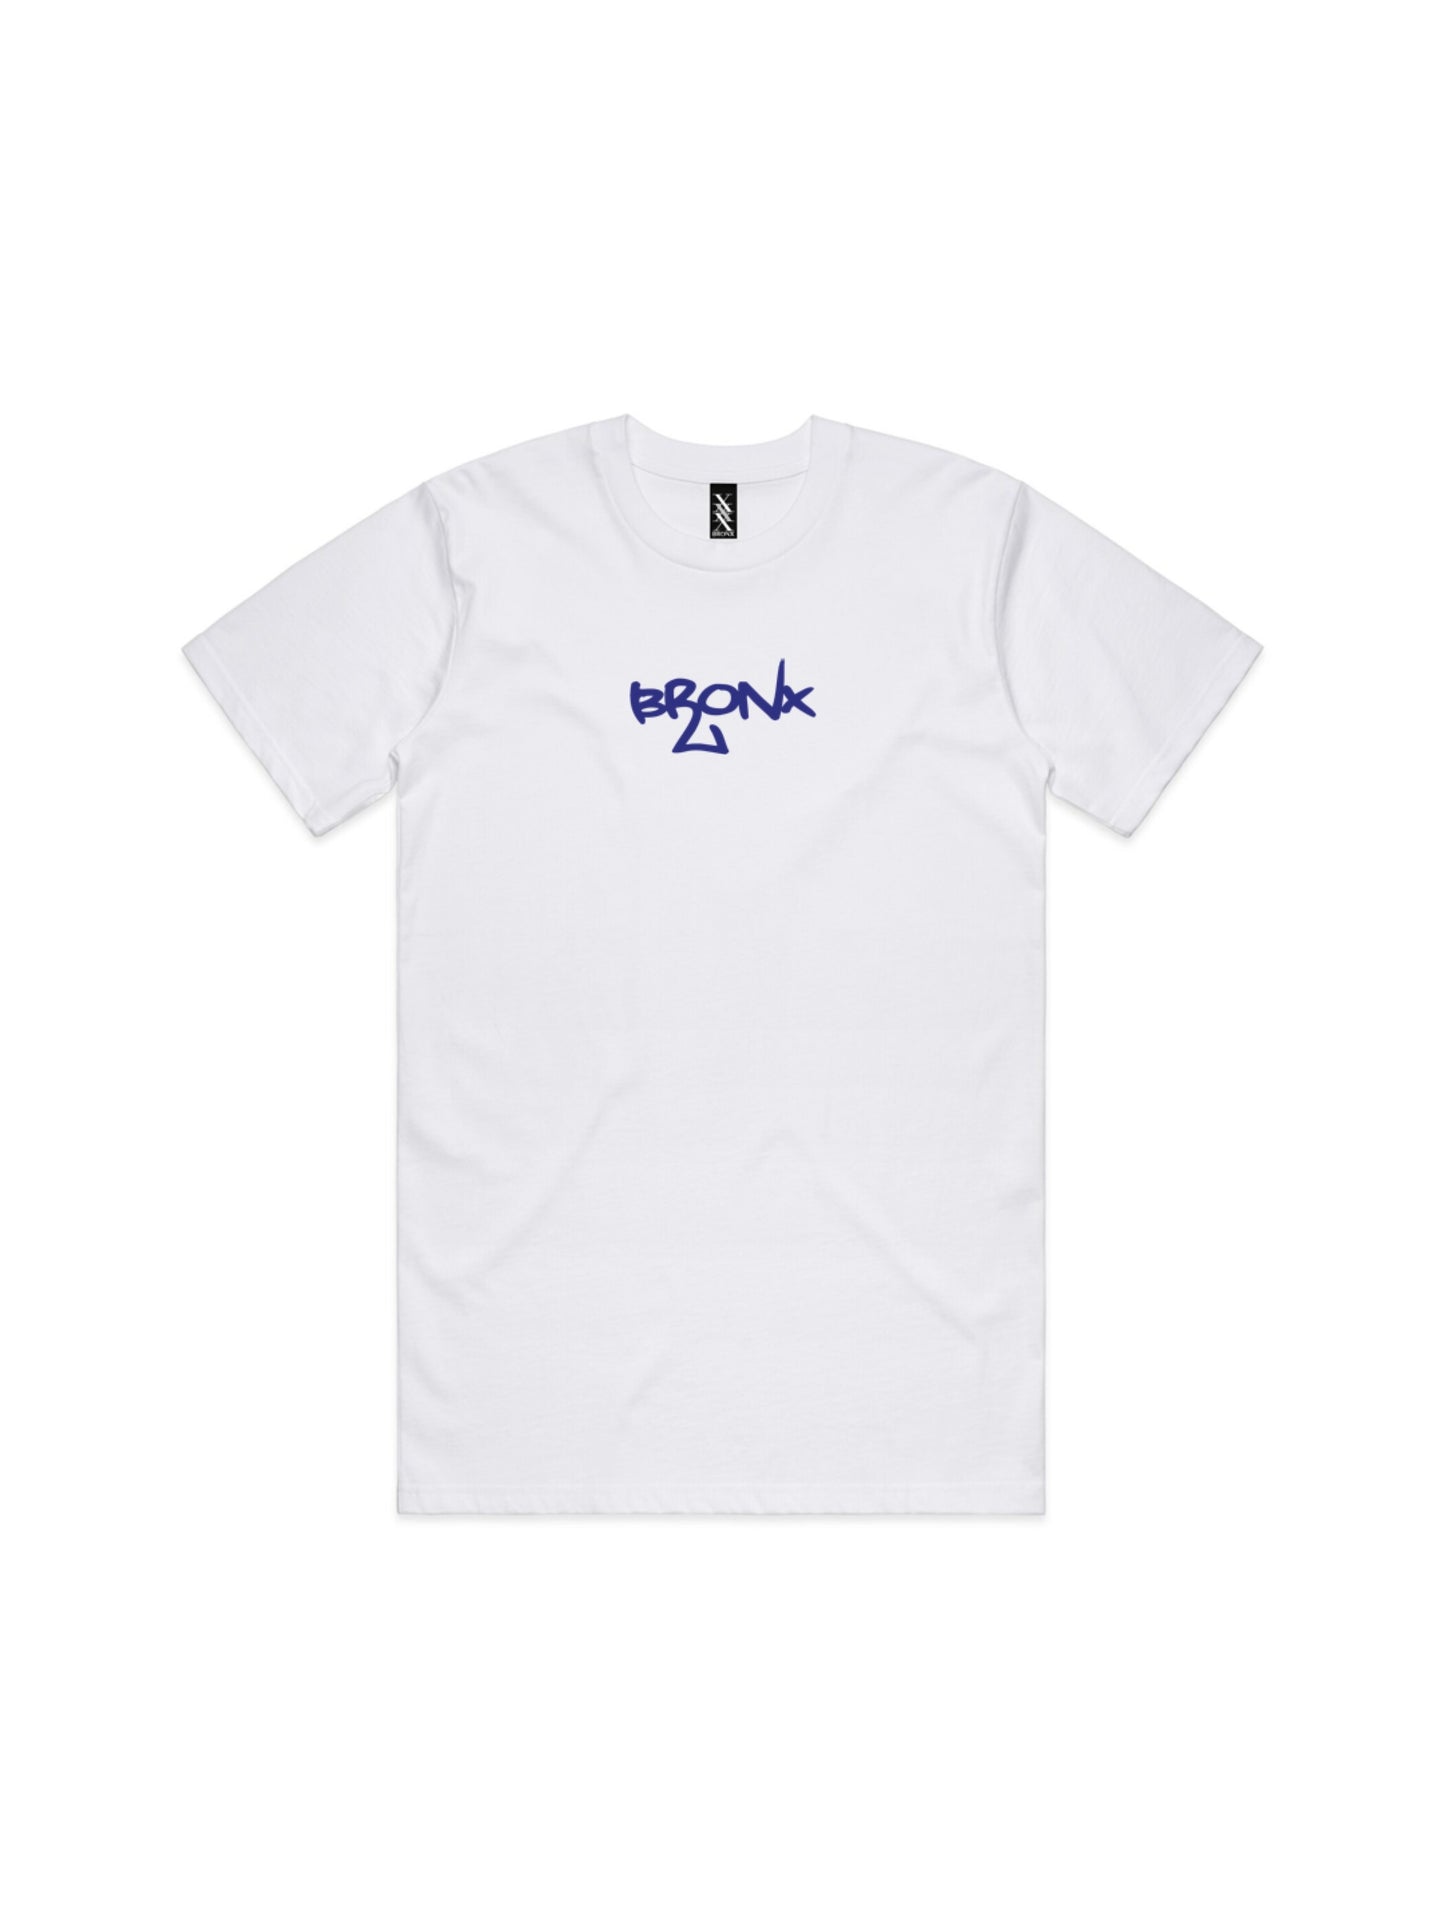 ‘Street’ T-Shirt - White